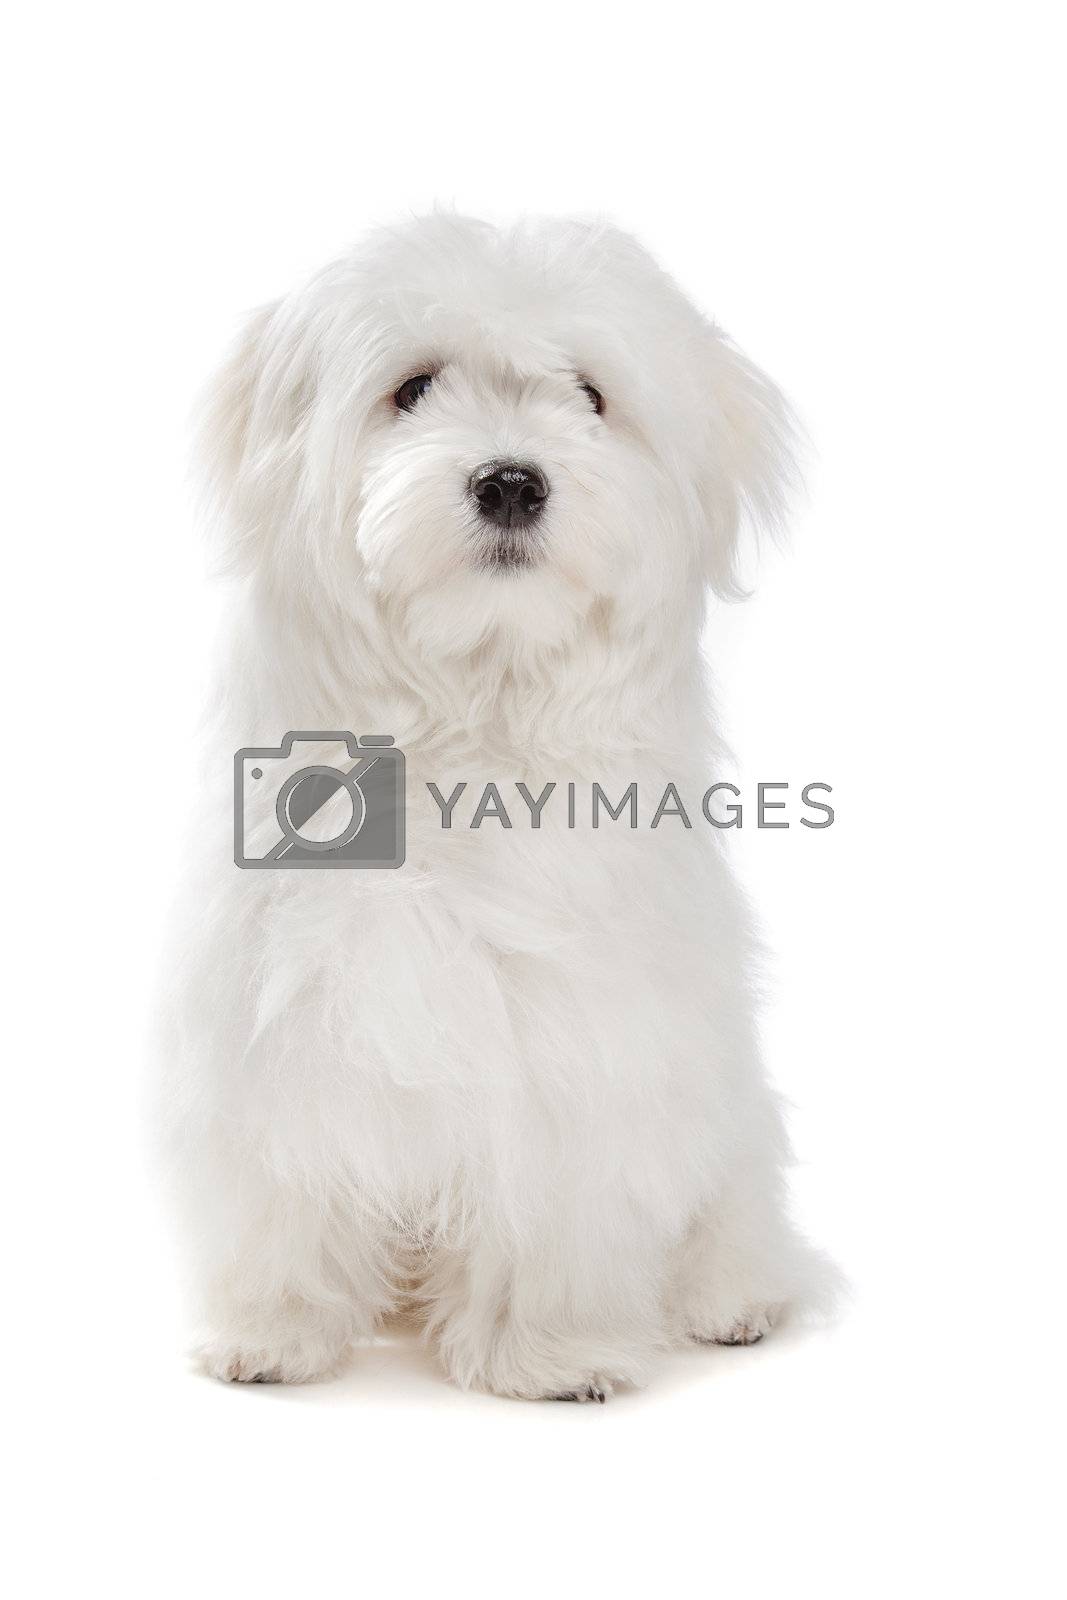 Royalty free image of Maltese dog by eriklam